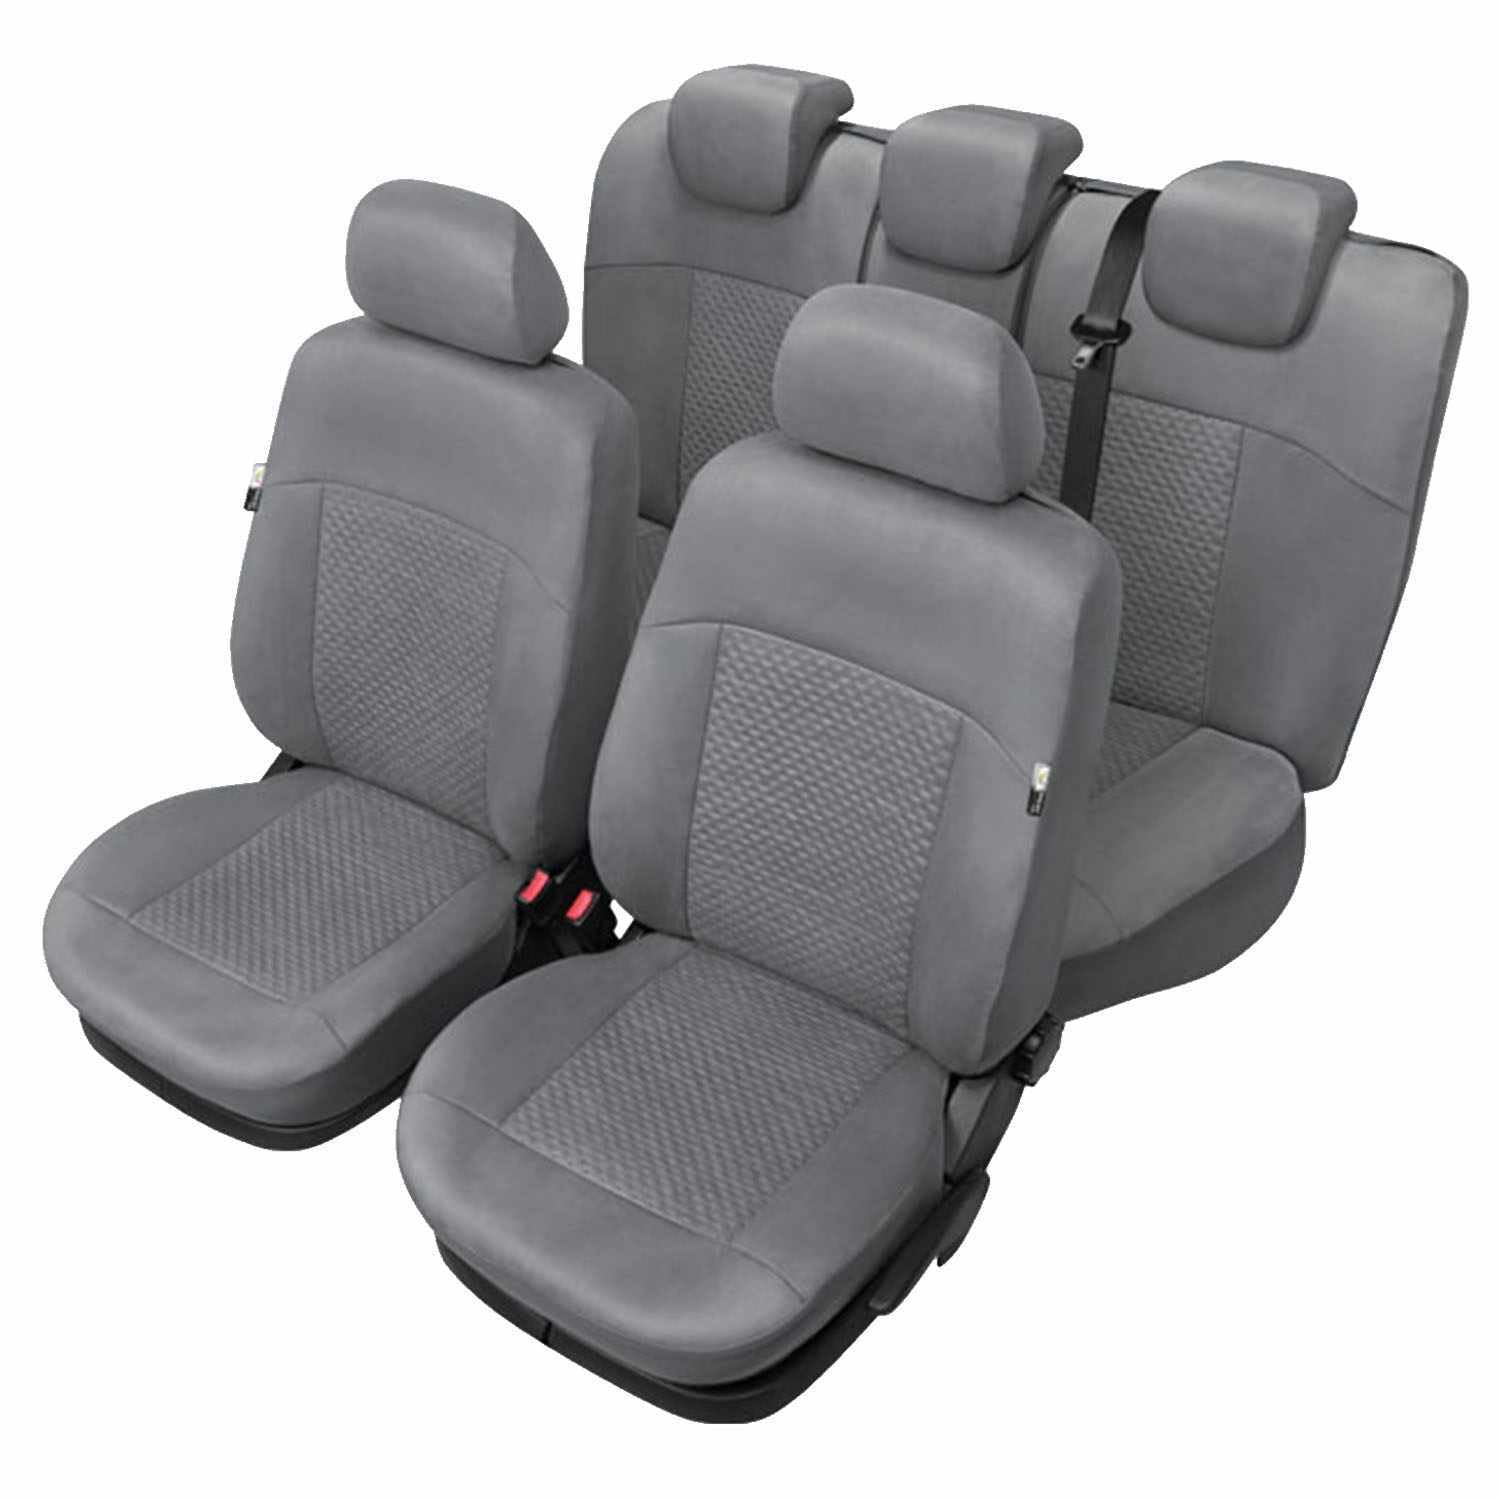 Autositzbezüge Autositzschoner Sitzbezüge Kompatibel mit Nissan Qashqai Auto Sitzbezug Grau Autositzauflage Autositz Sitzauflagen Tuning Auto Zubehör Innenraum von Saferide